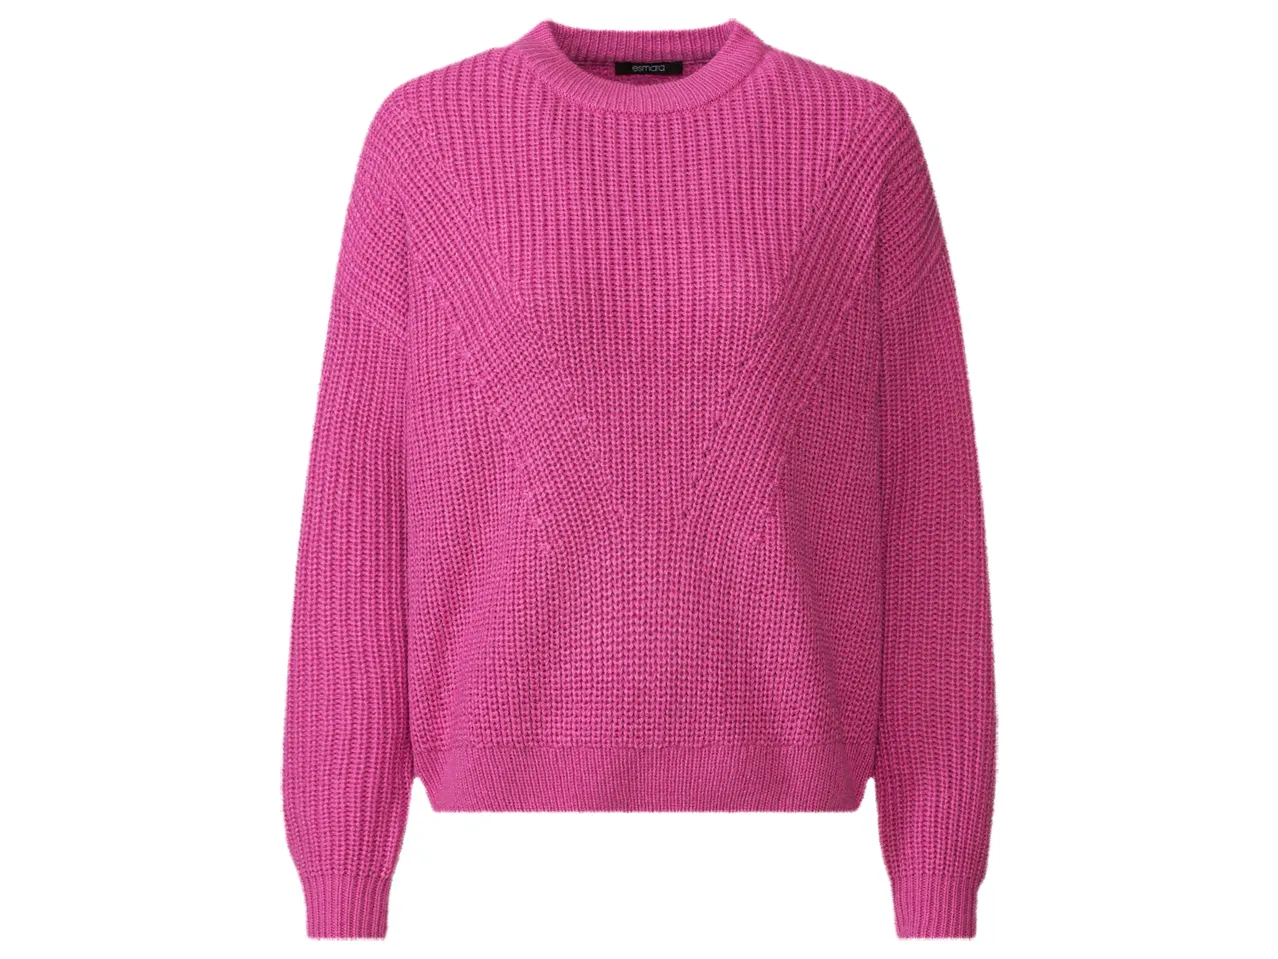 esmara® Sweter damski , cena 19,5 PLN 
esmara® Sweter damski 3 wzory 
- rozmiary: ...